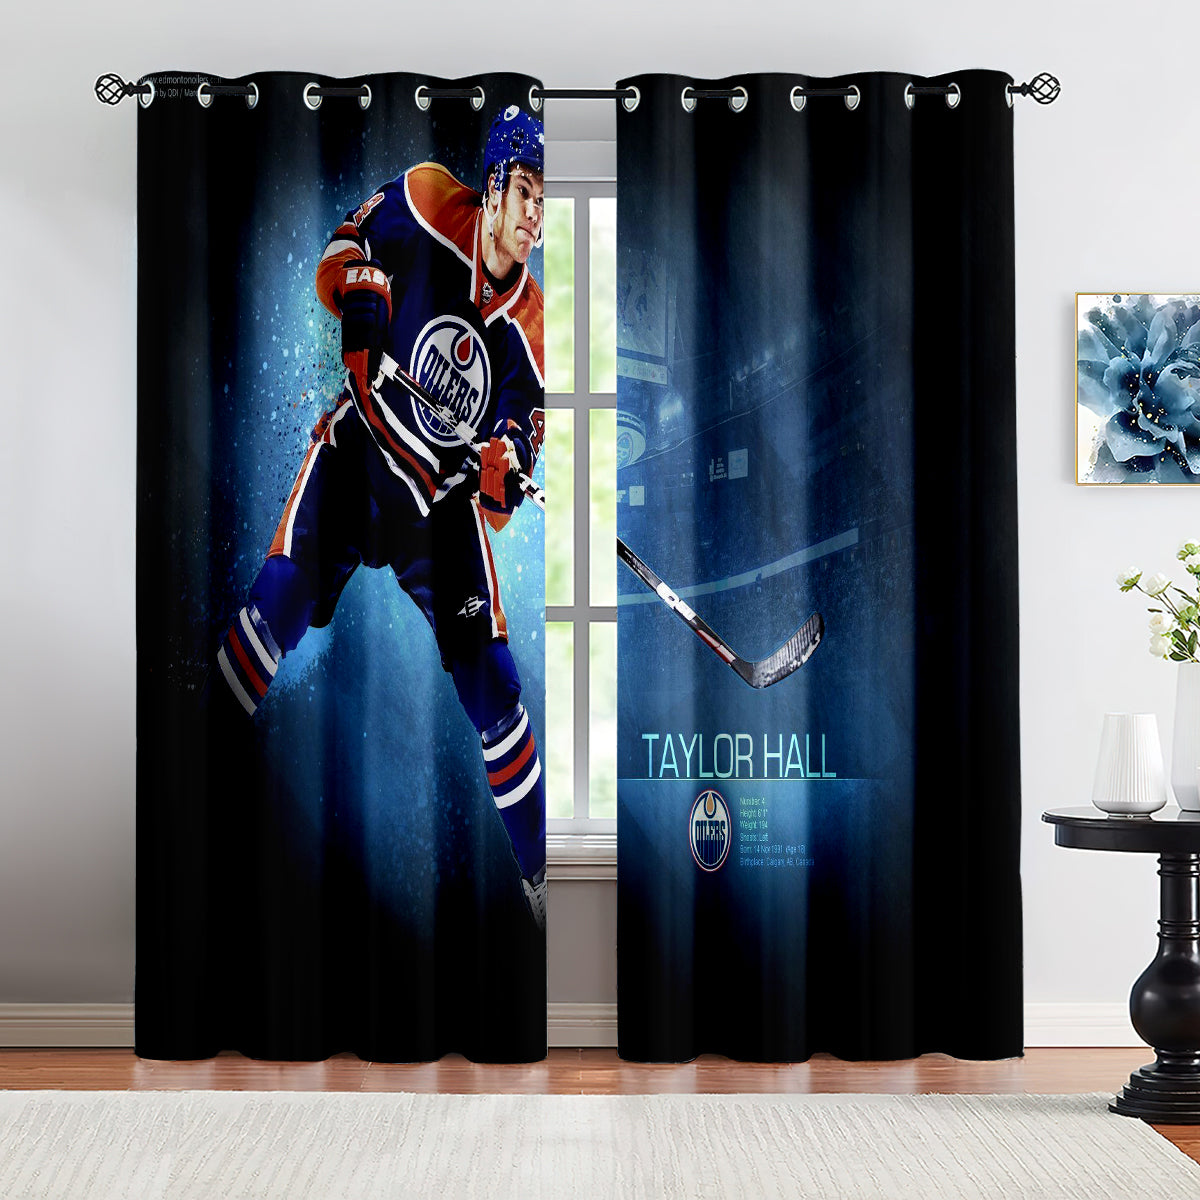 Edmonton Oilers  Hockey League Blackout Curtains Drapes For Window Treatment Set